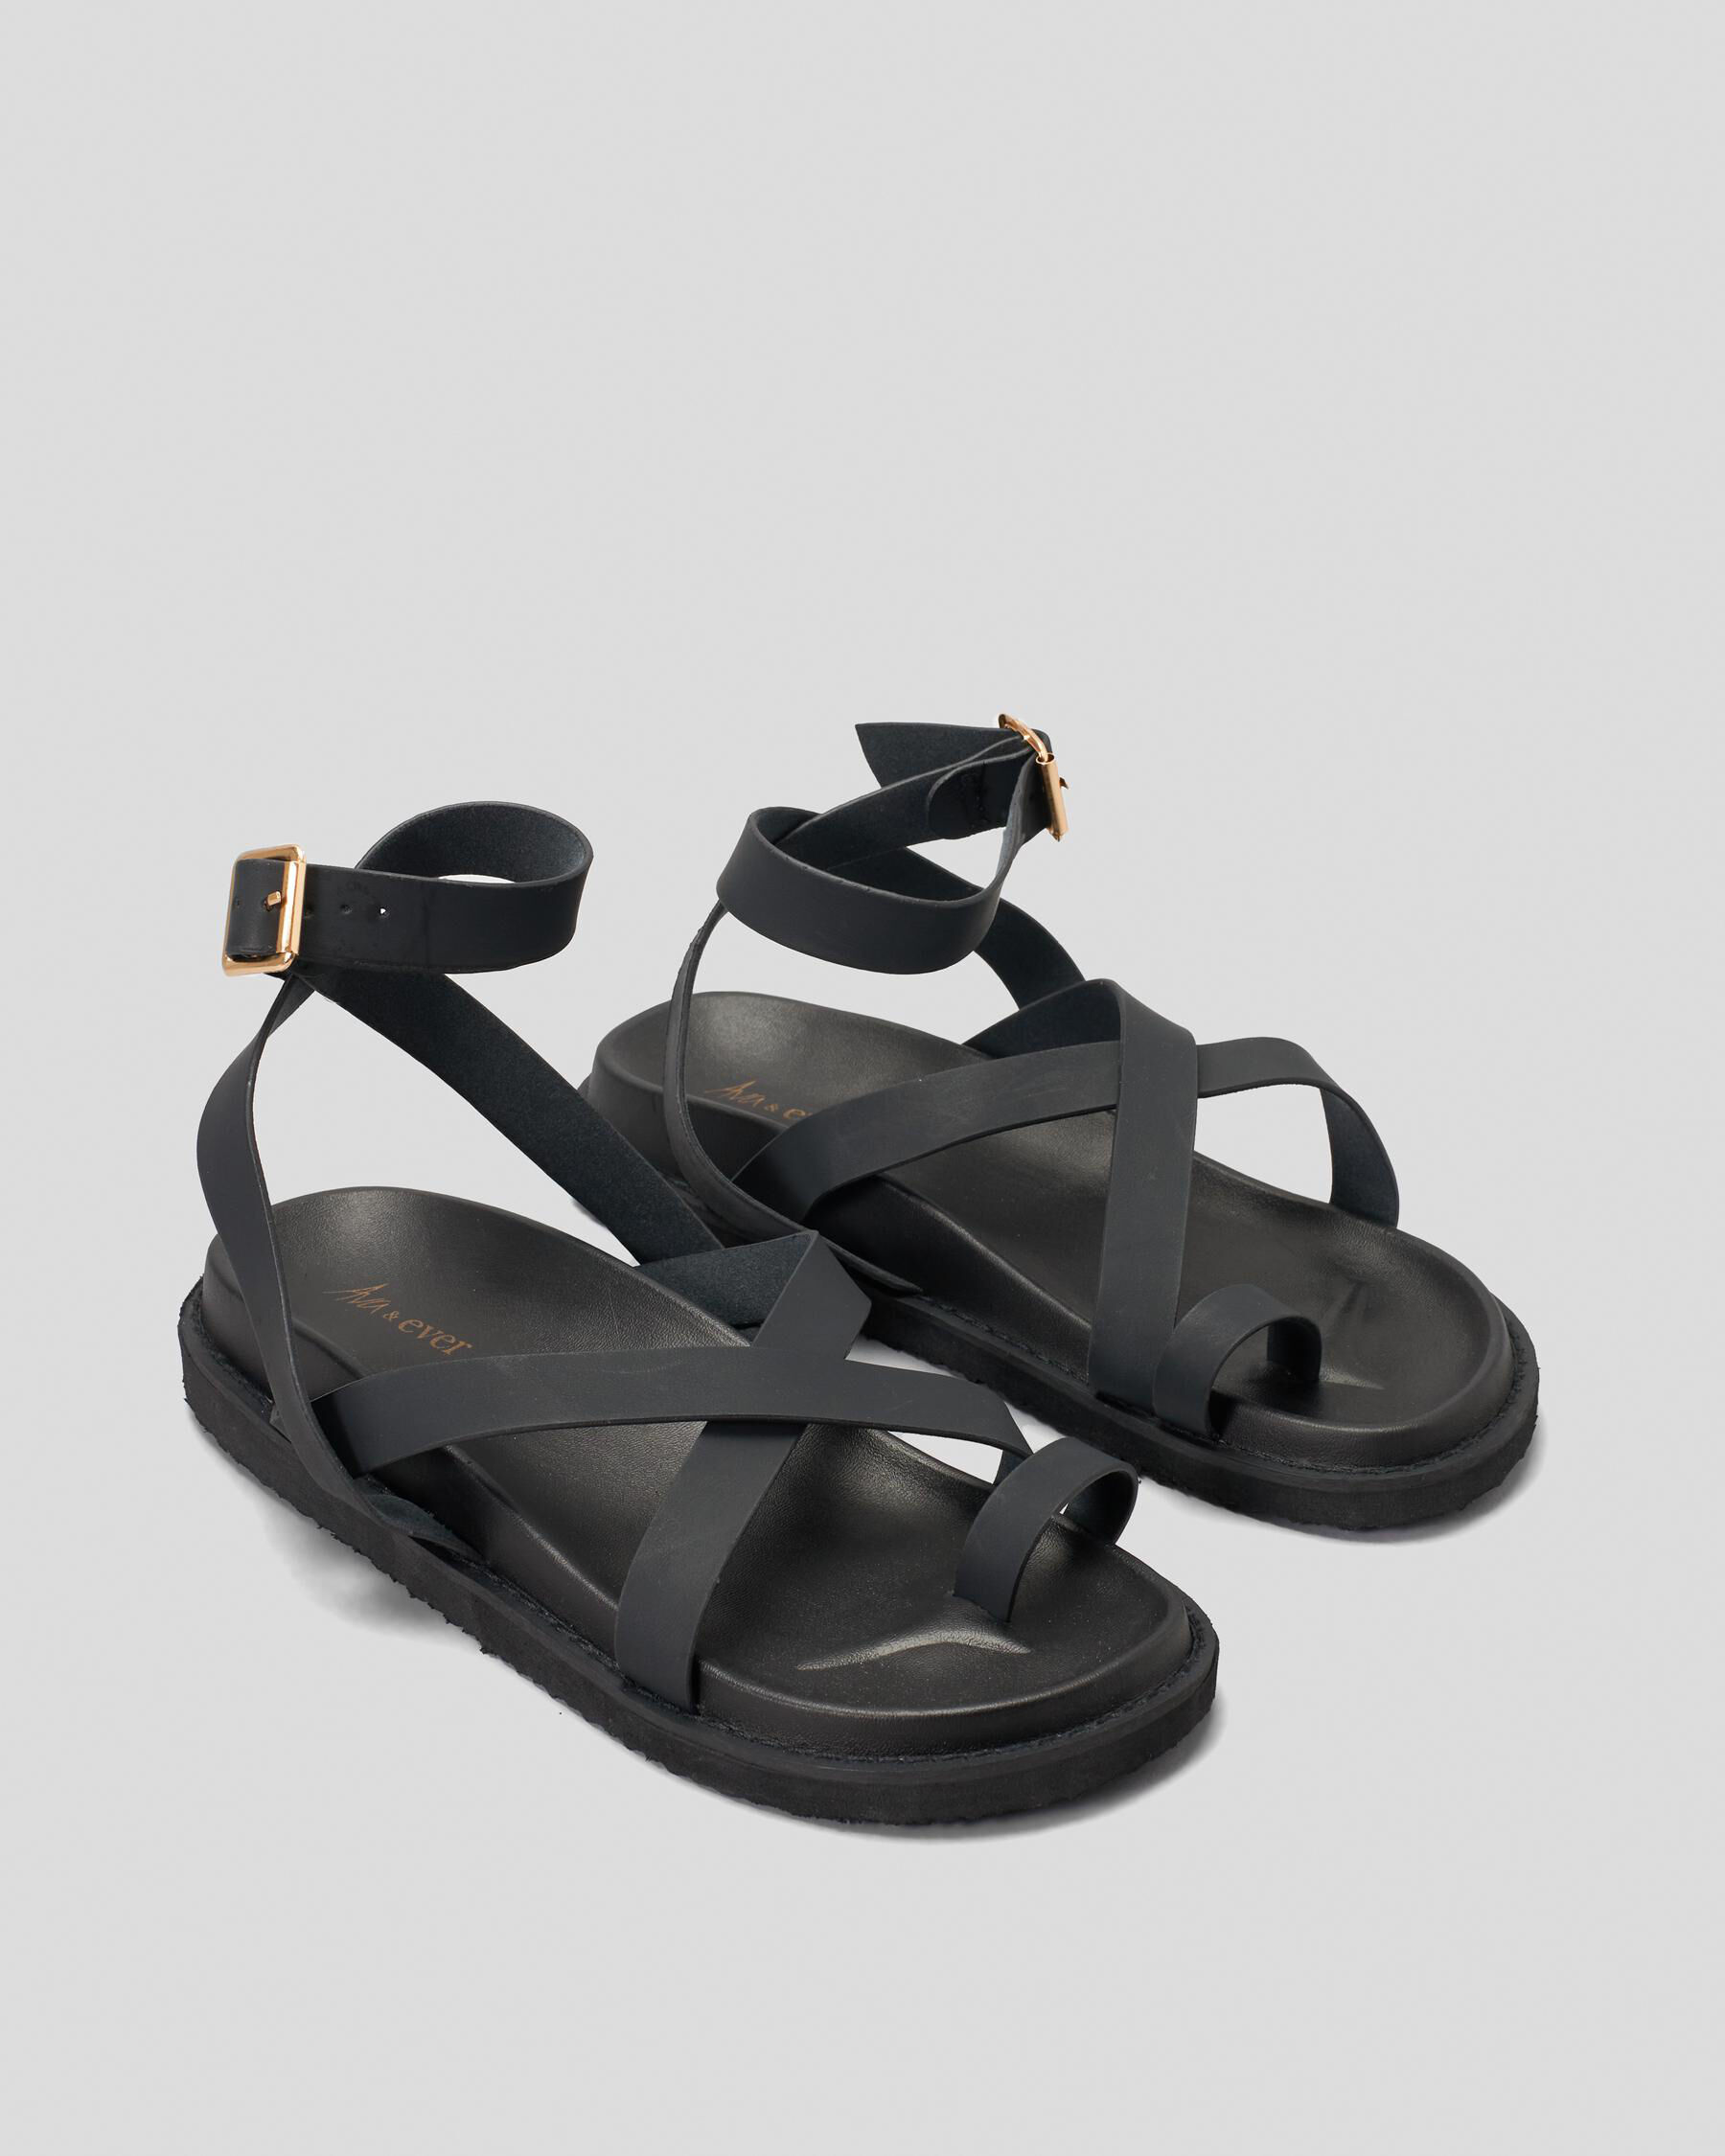 Demonia - WAVE-13 Grey Reflective Platform Sandals - Buy Online Australia